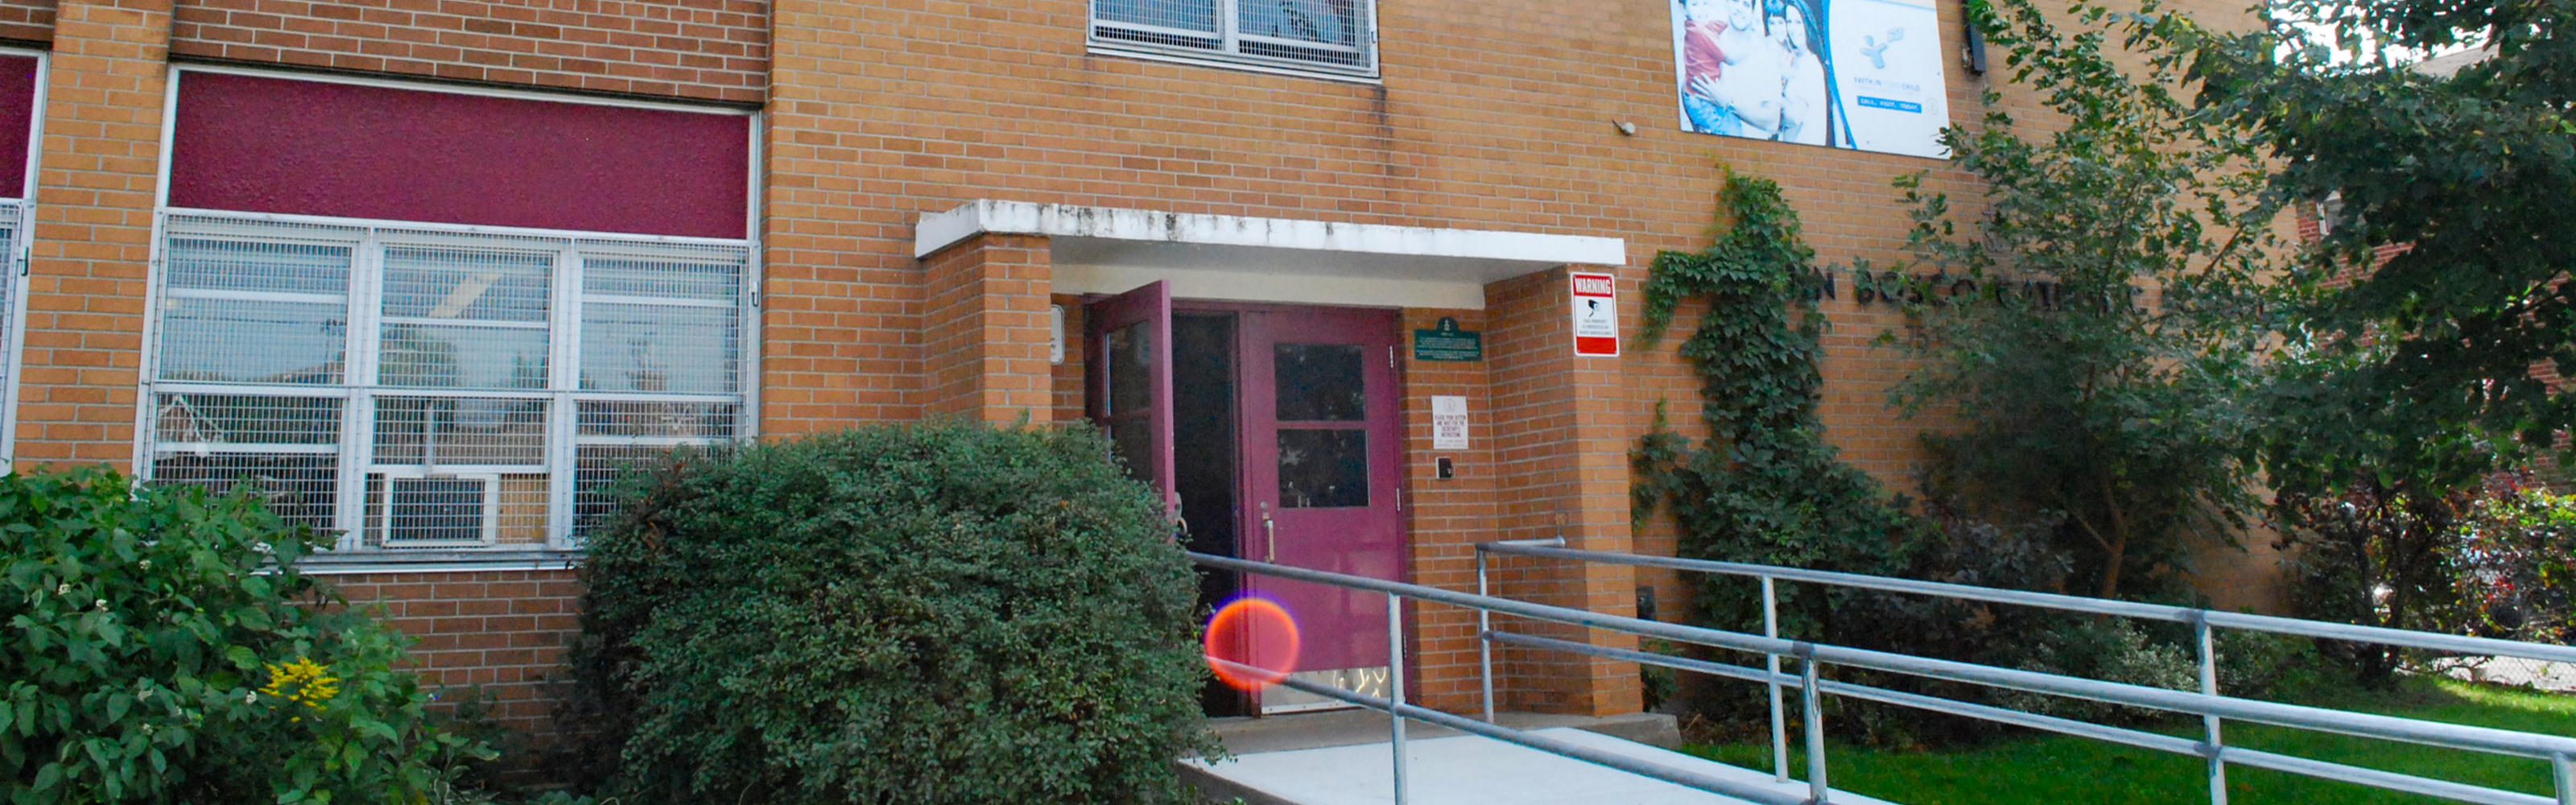 The front of the St. John Bosco Catholic School building.